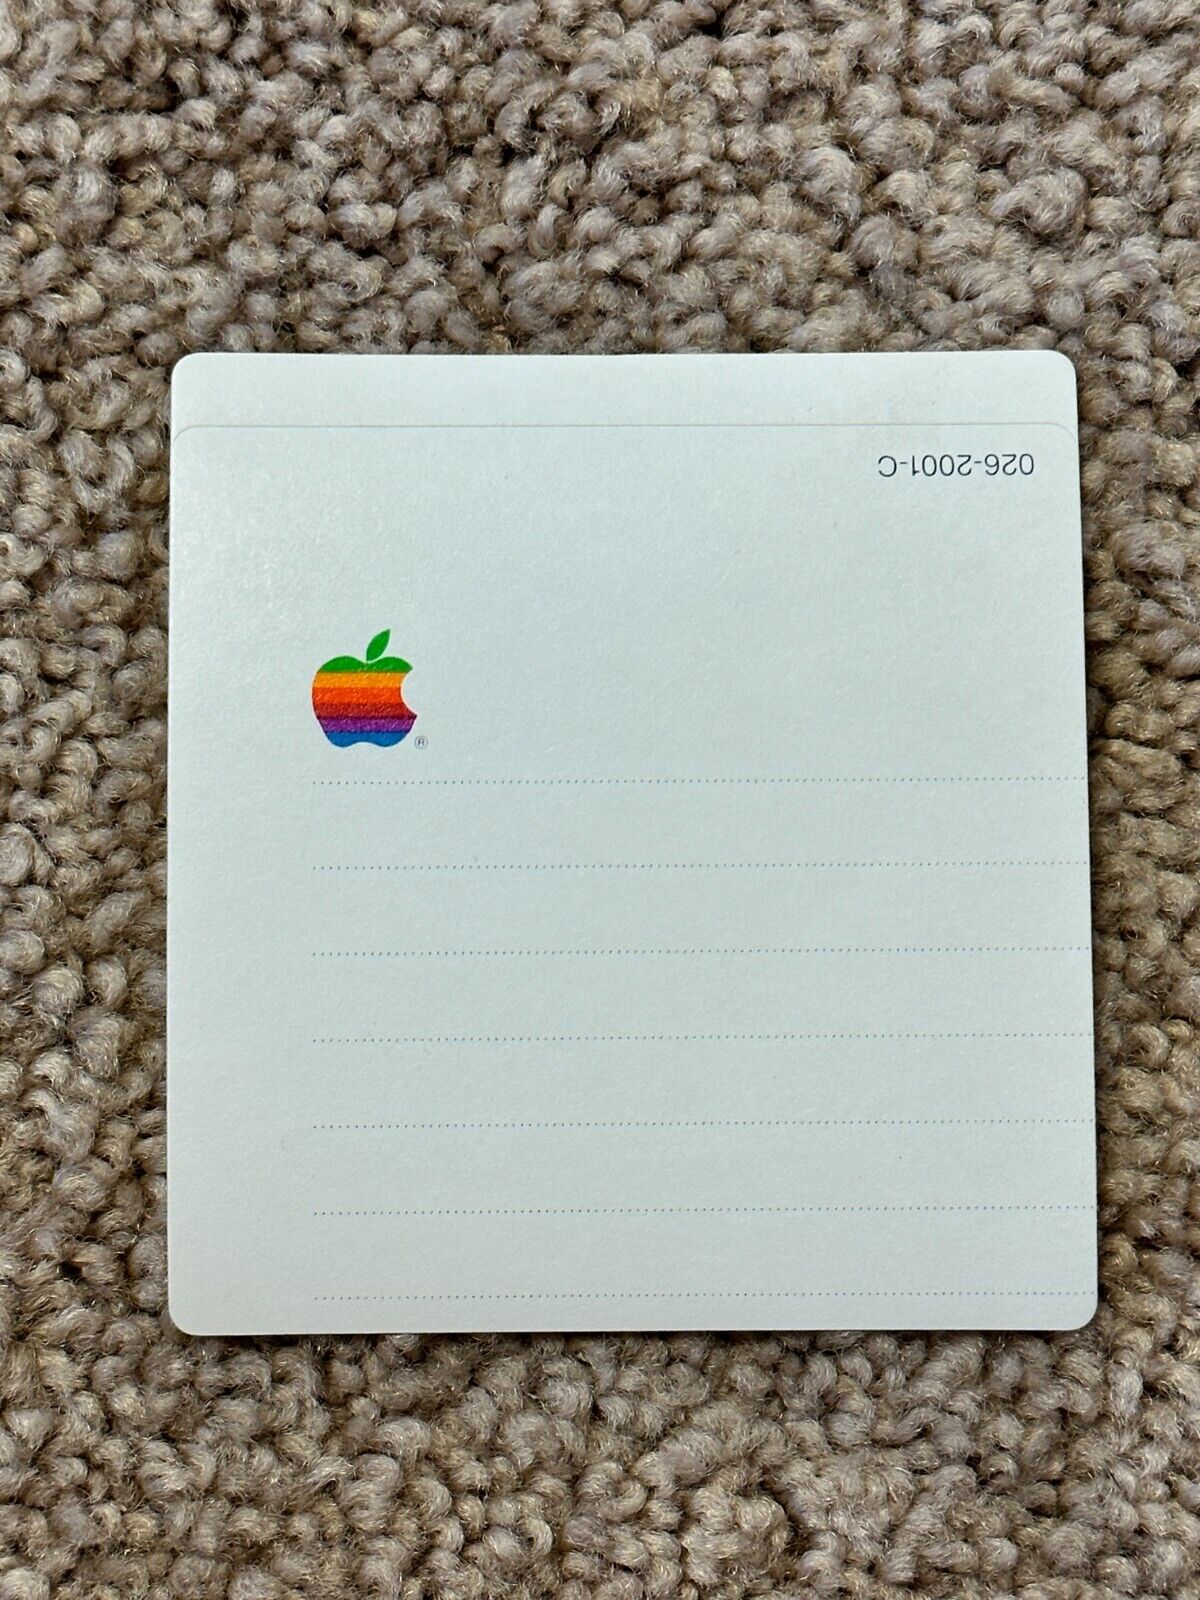 5 Vintage Apple Macintosh Floppy Disk Label / Sticker w Logo (no disk) 026-2001